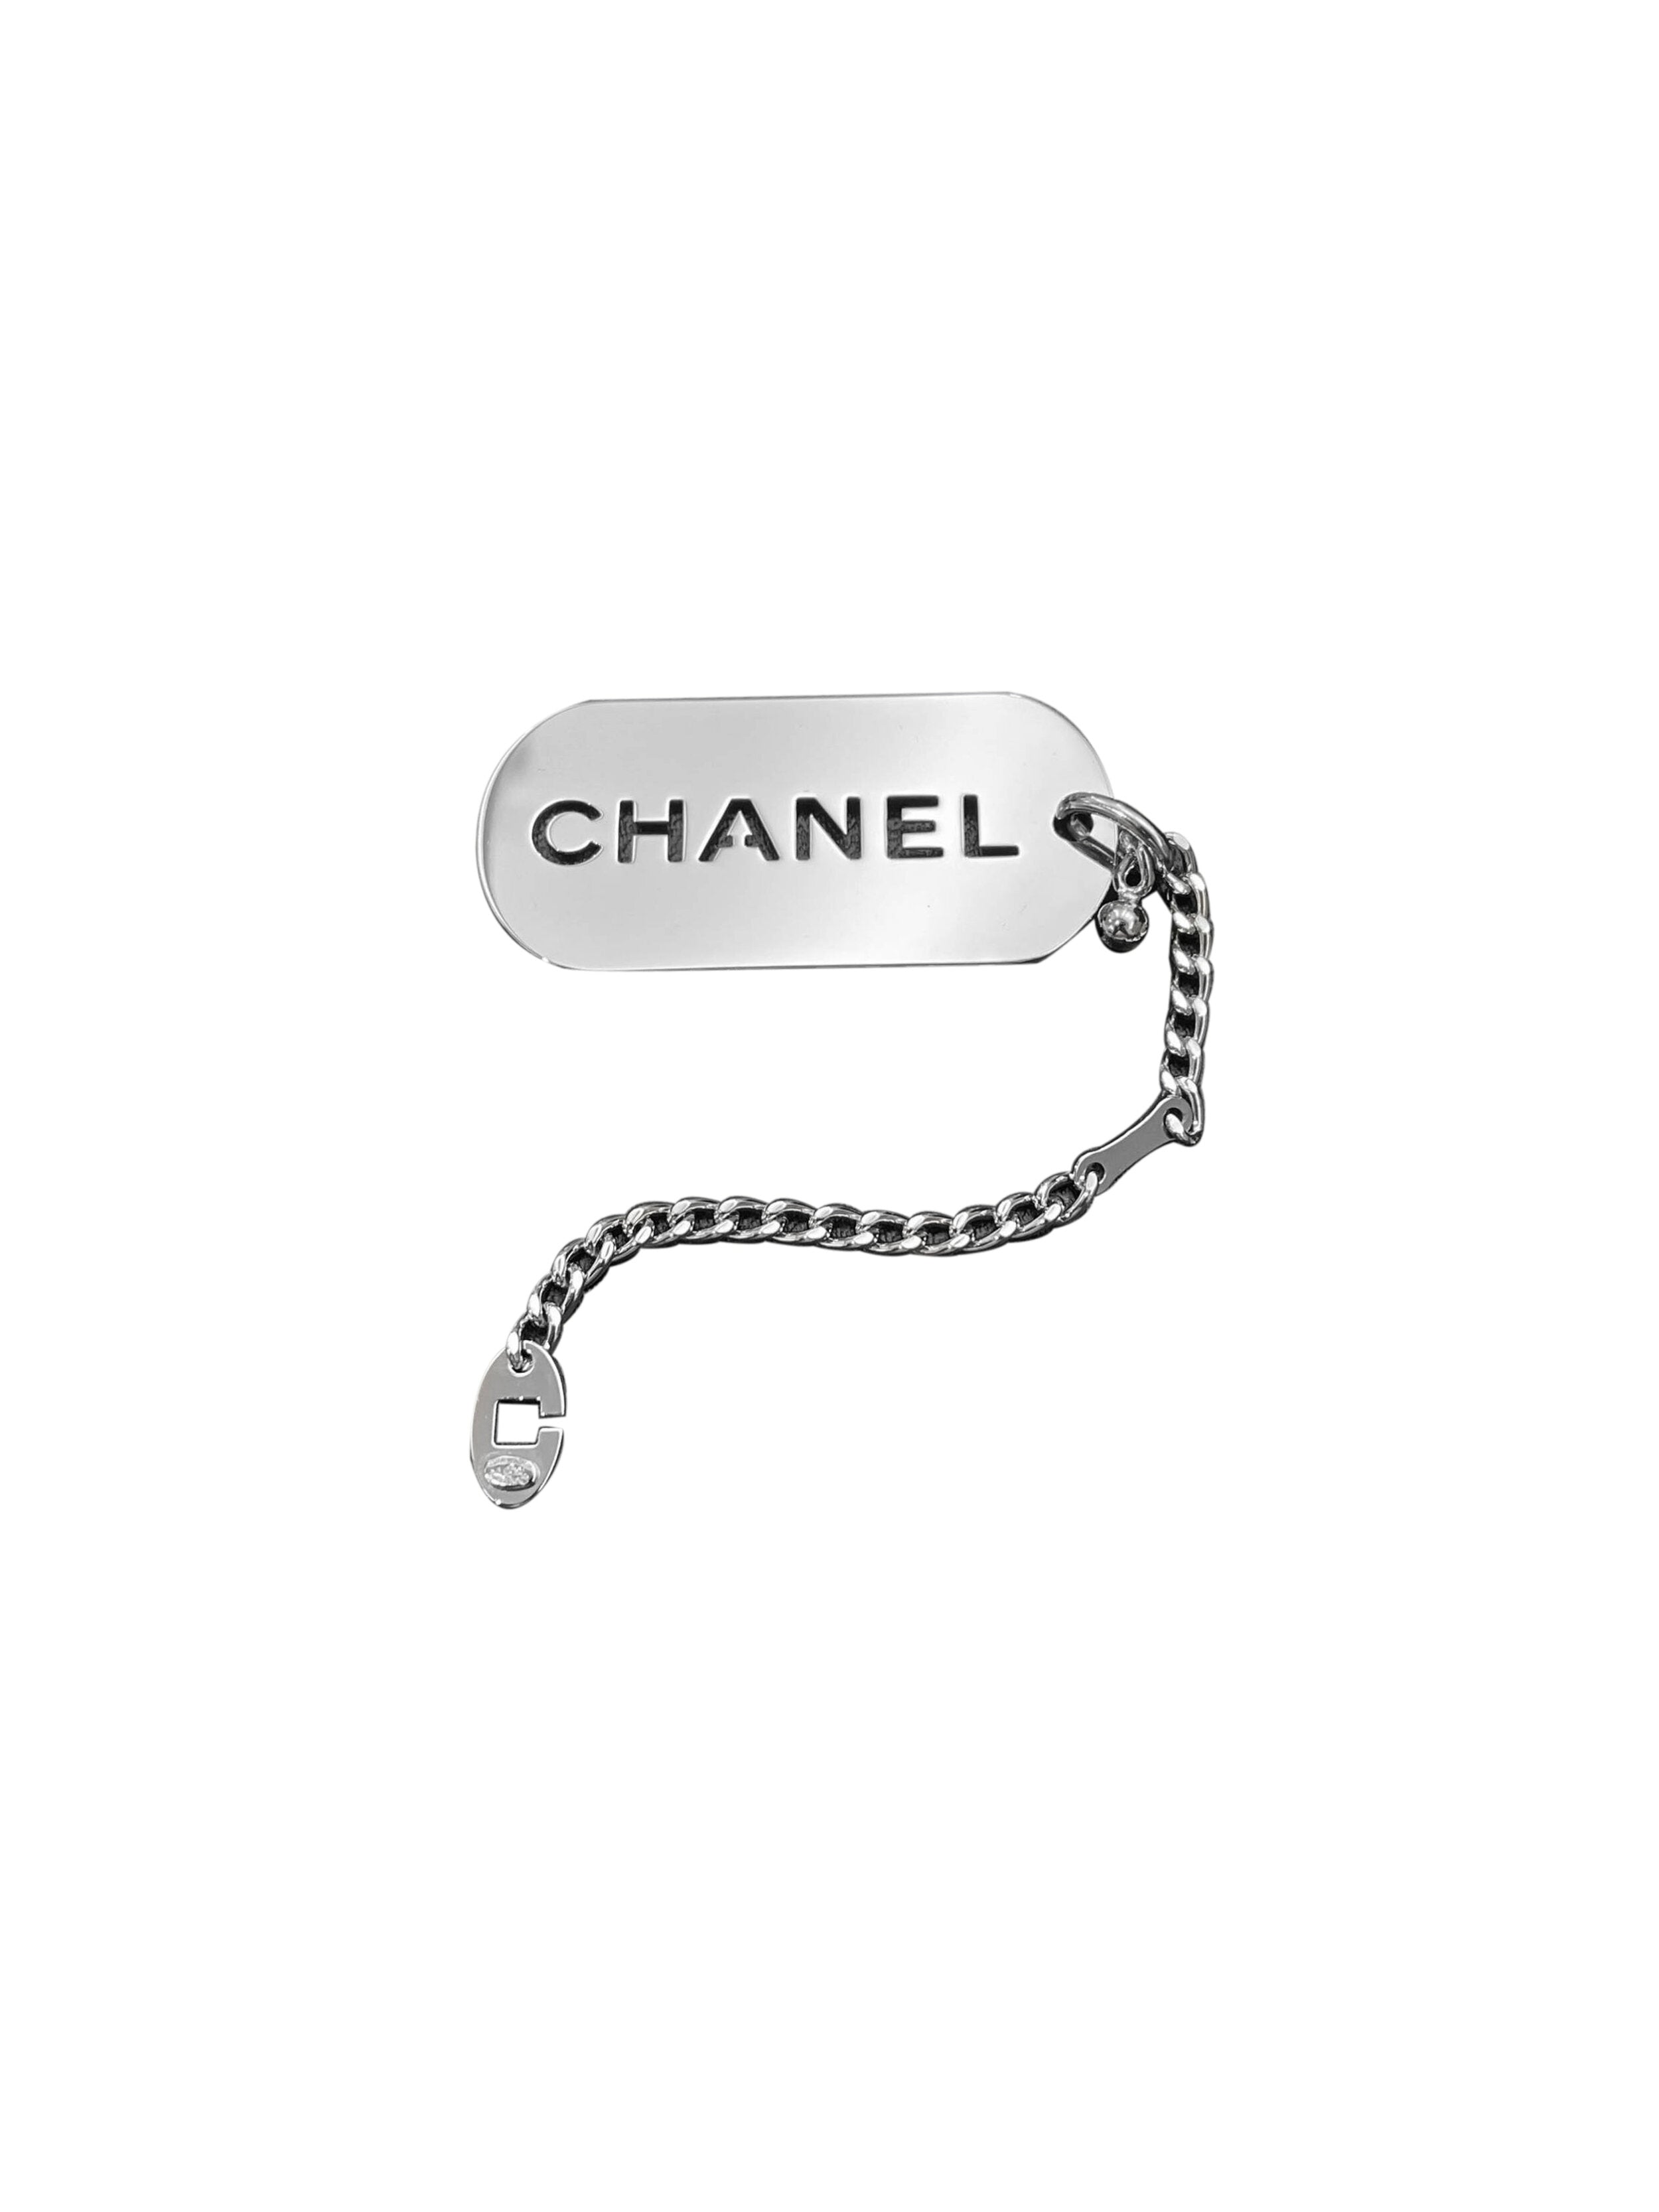 CHANEL, Accessories, Chanel Cc Key Holder